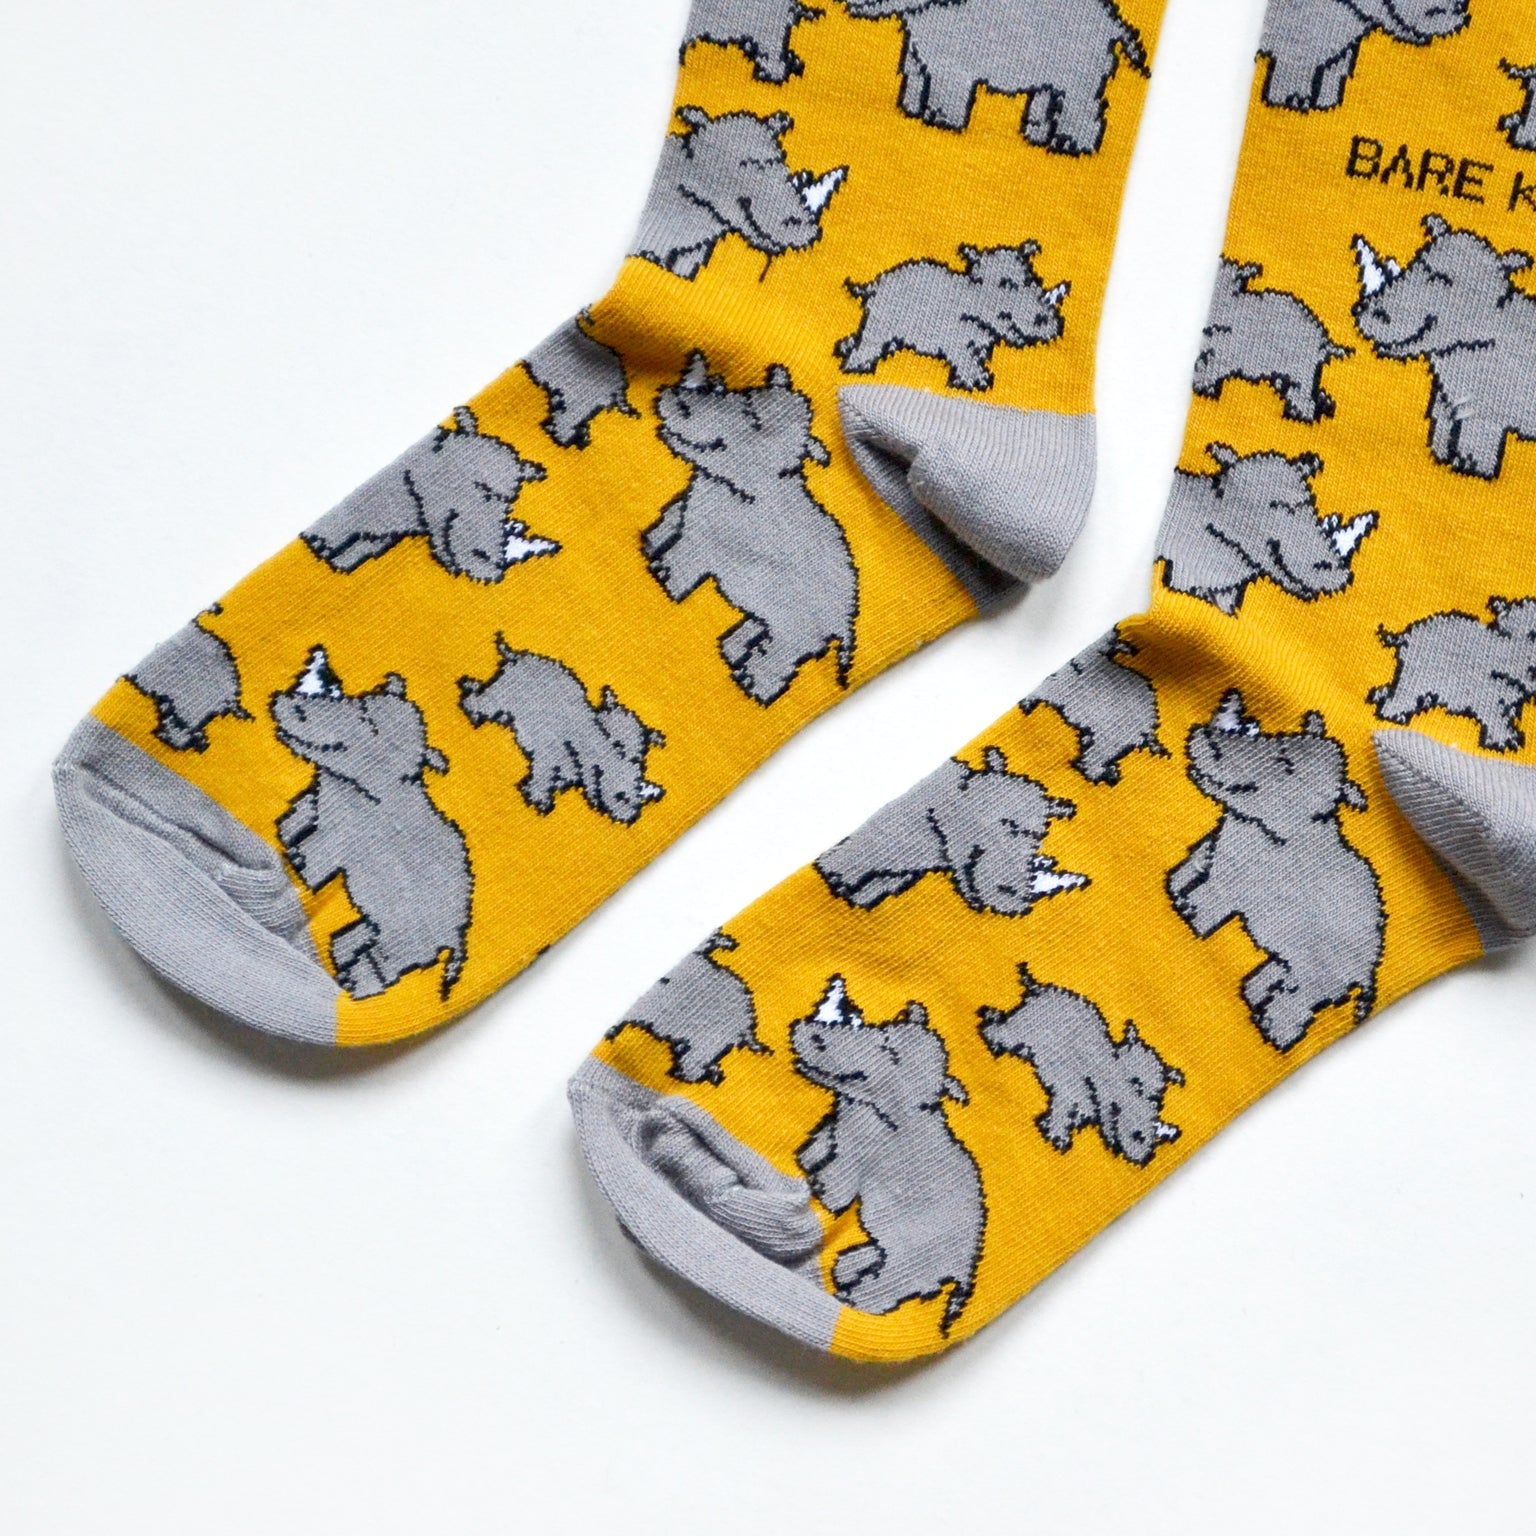 Bare Kind Bamboo Socks Adult – Rhinos